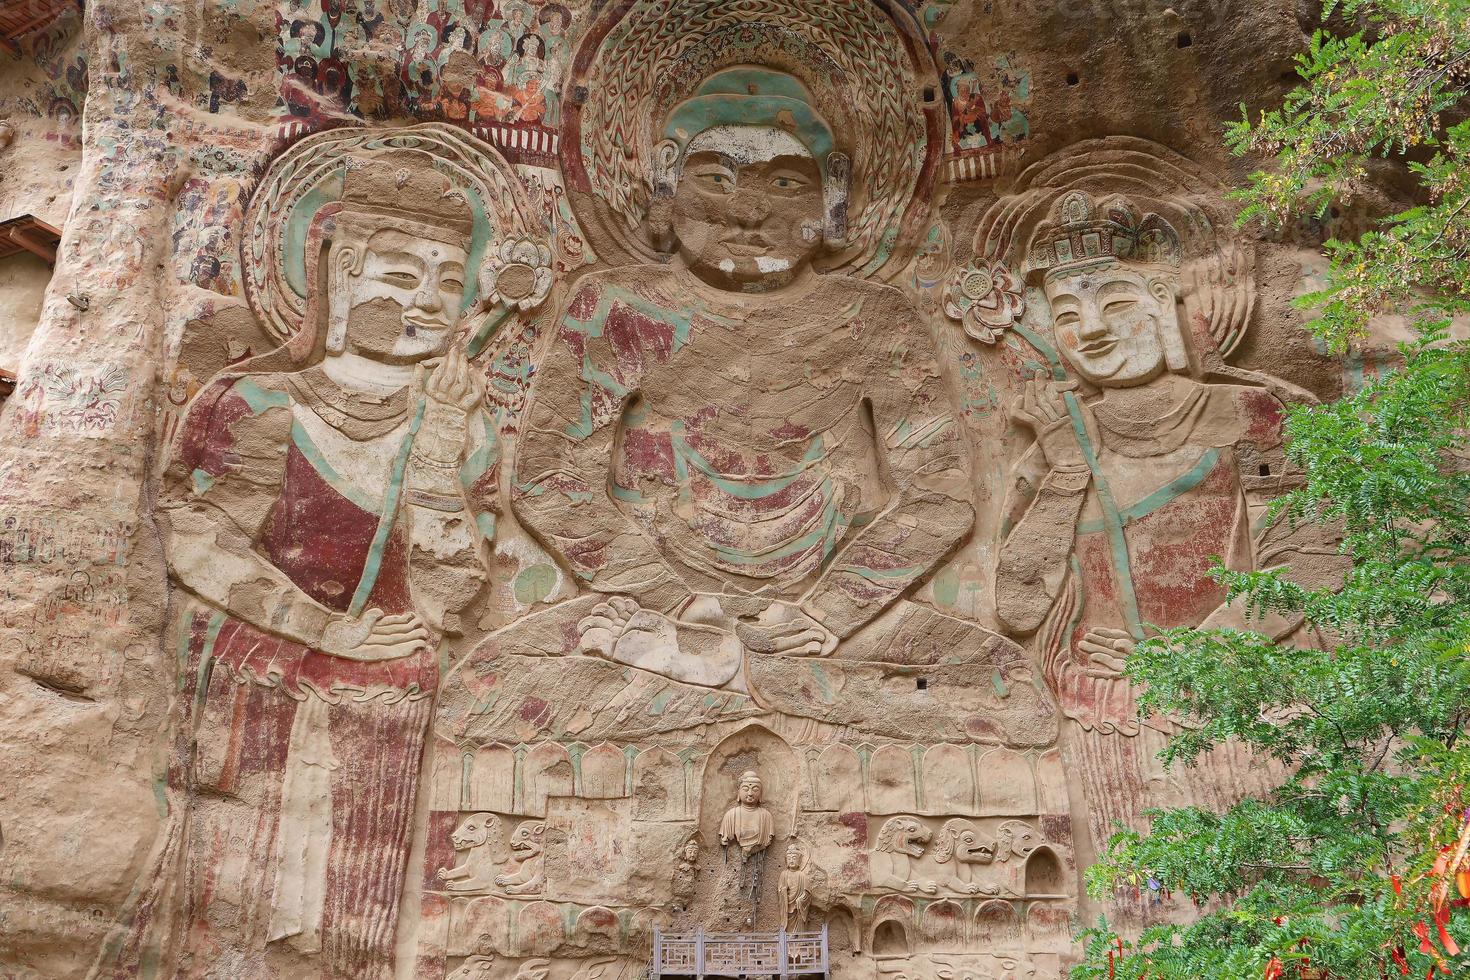 La gruta del templo de la Shao pintura en relieve en tianshui wushan china foto